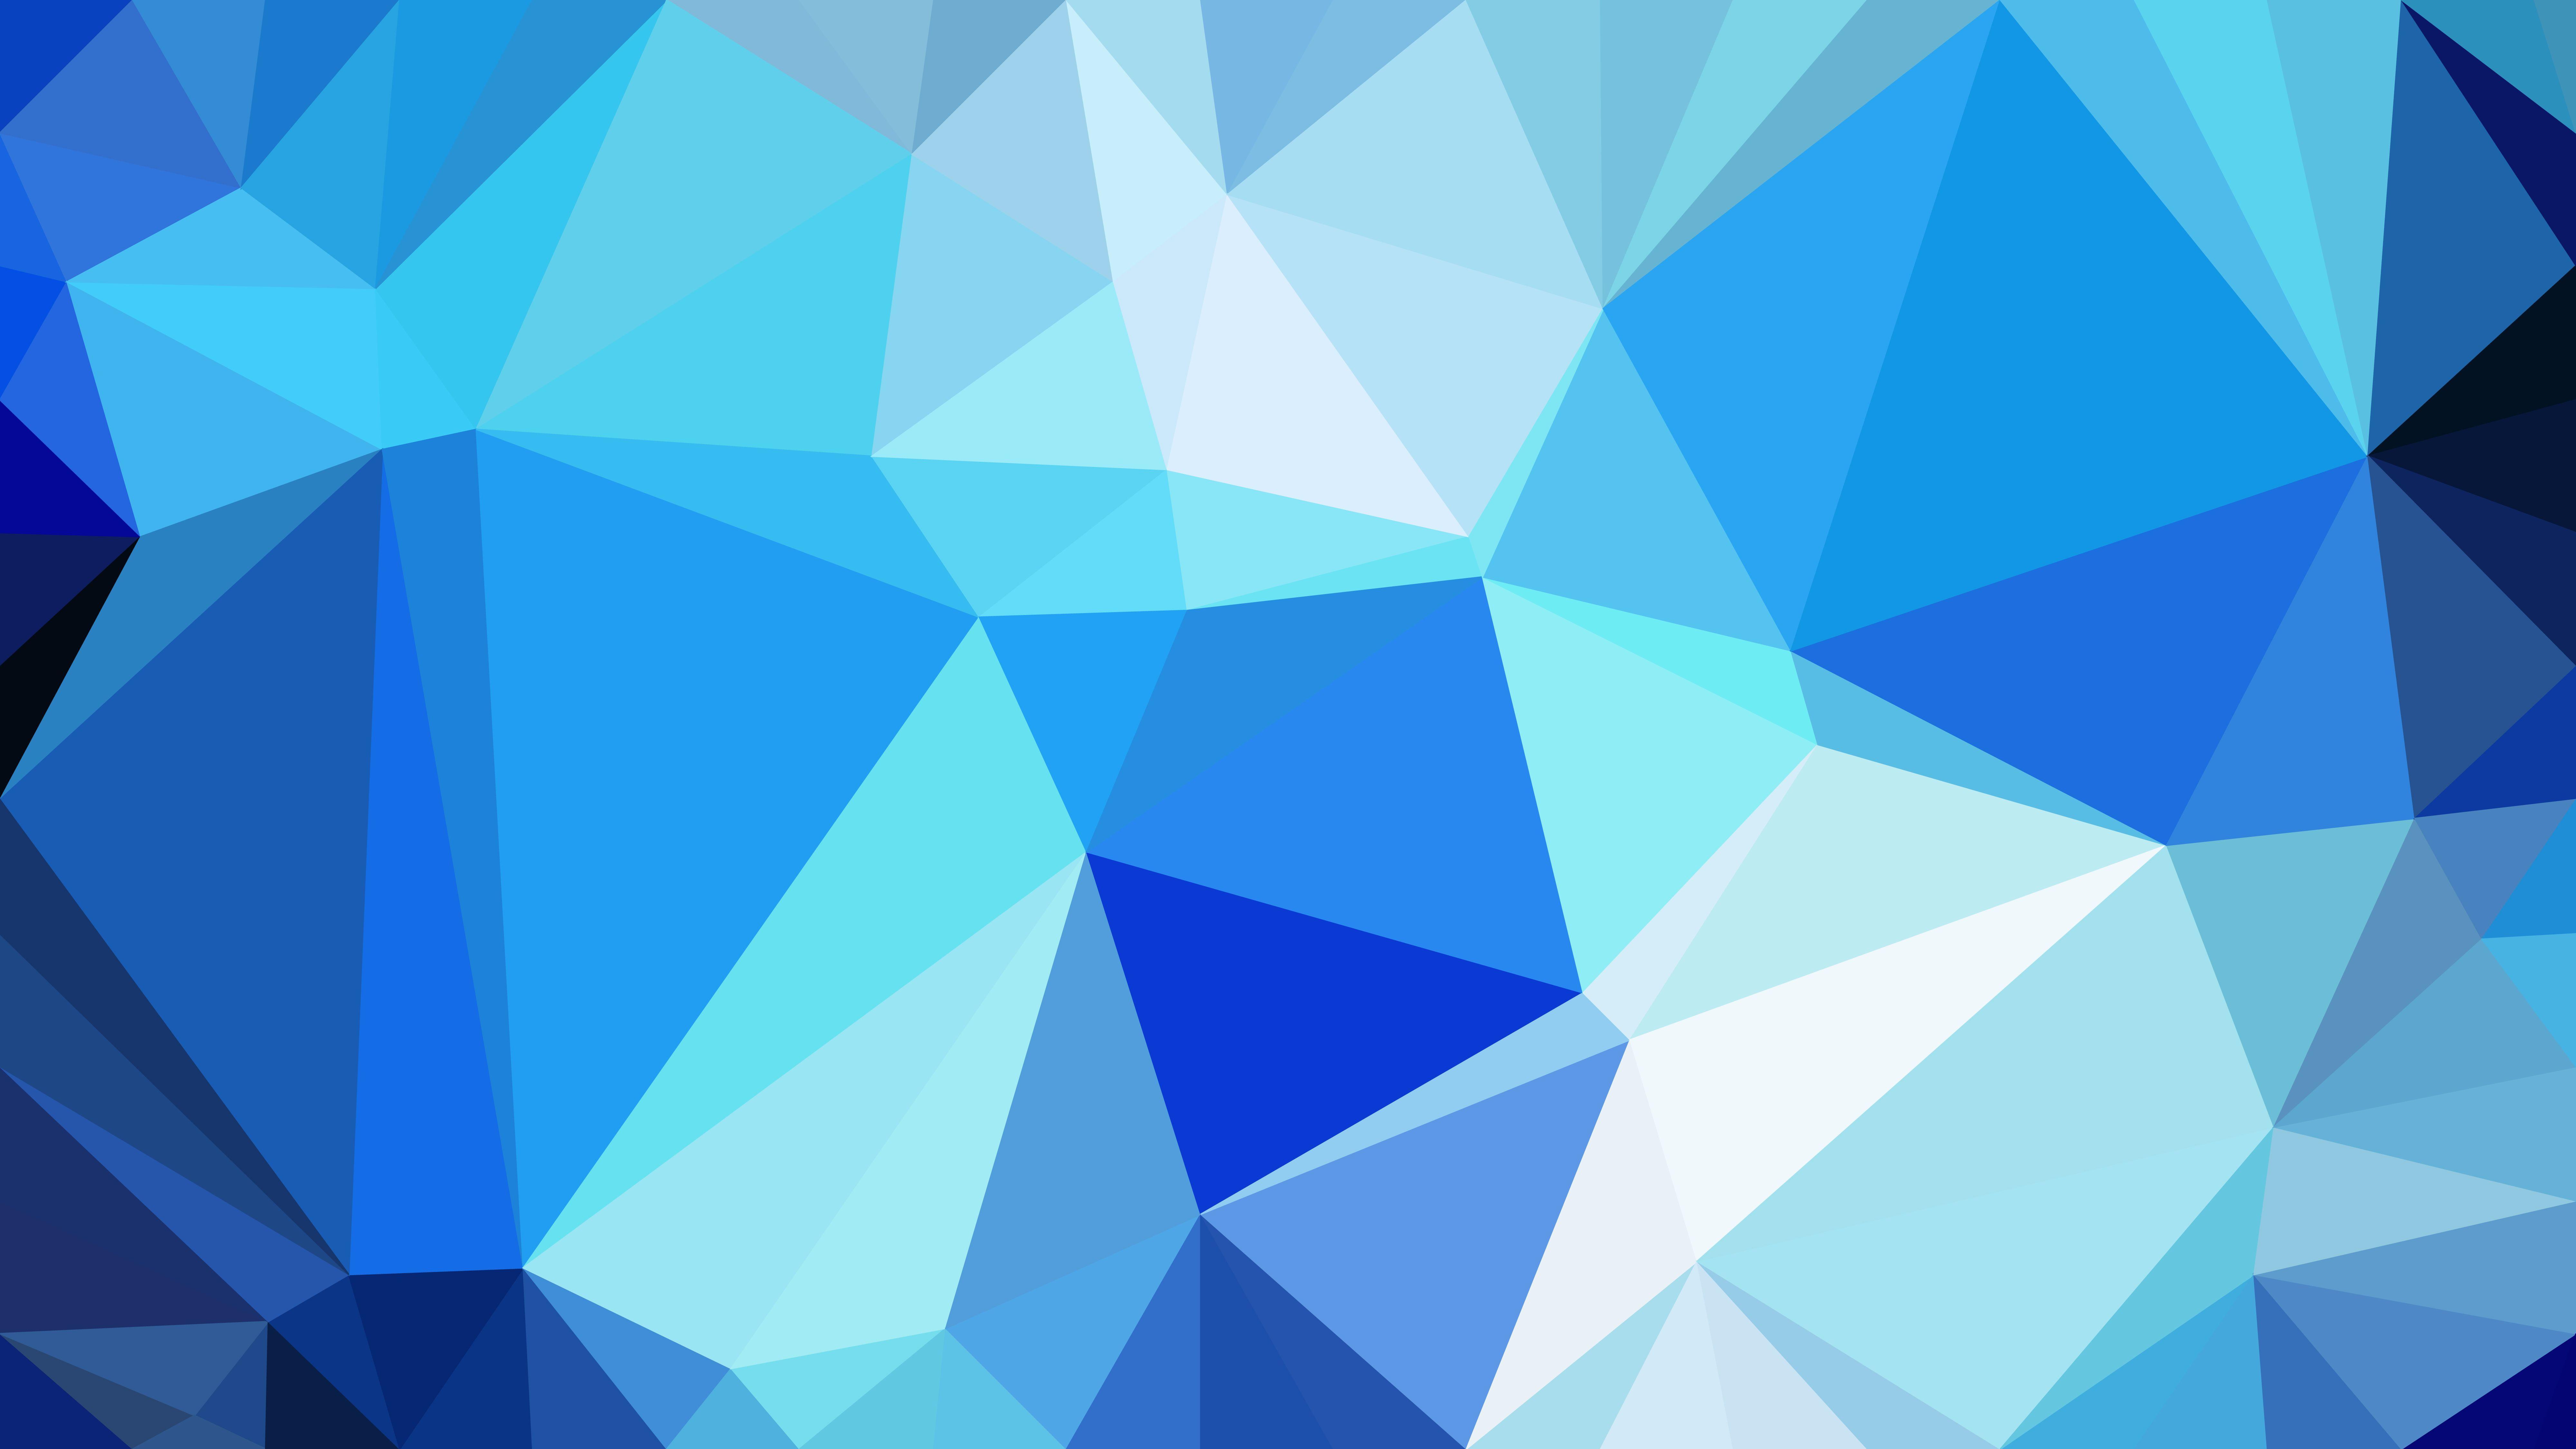  Light  Blue  Geometric  Wallpapers  Top Free Light  Blue  